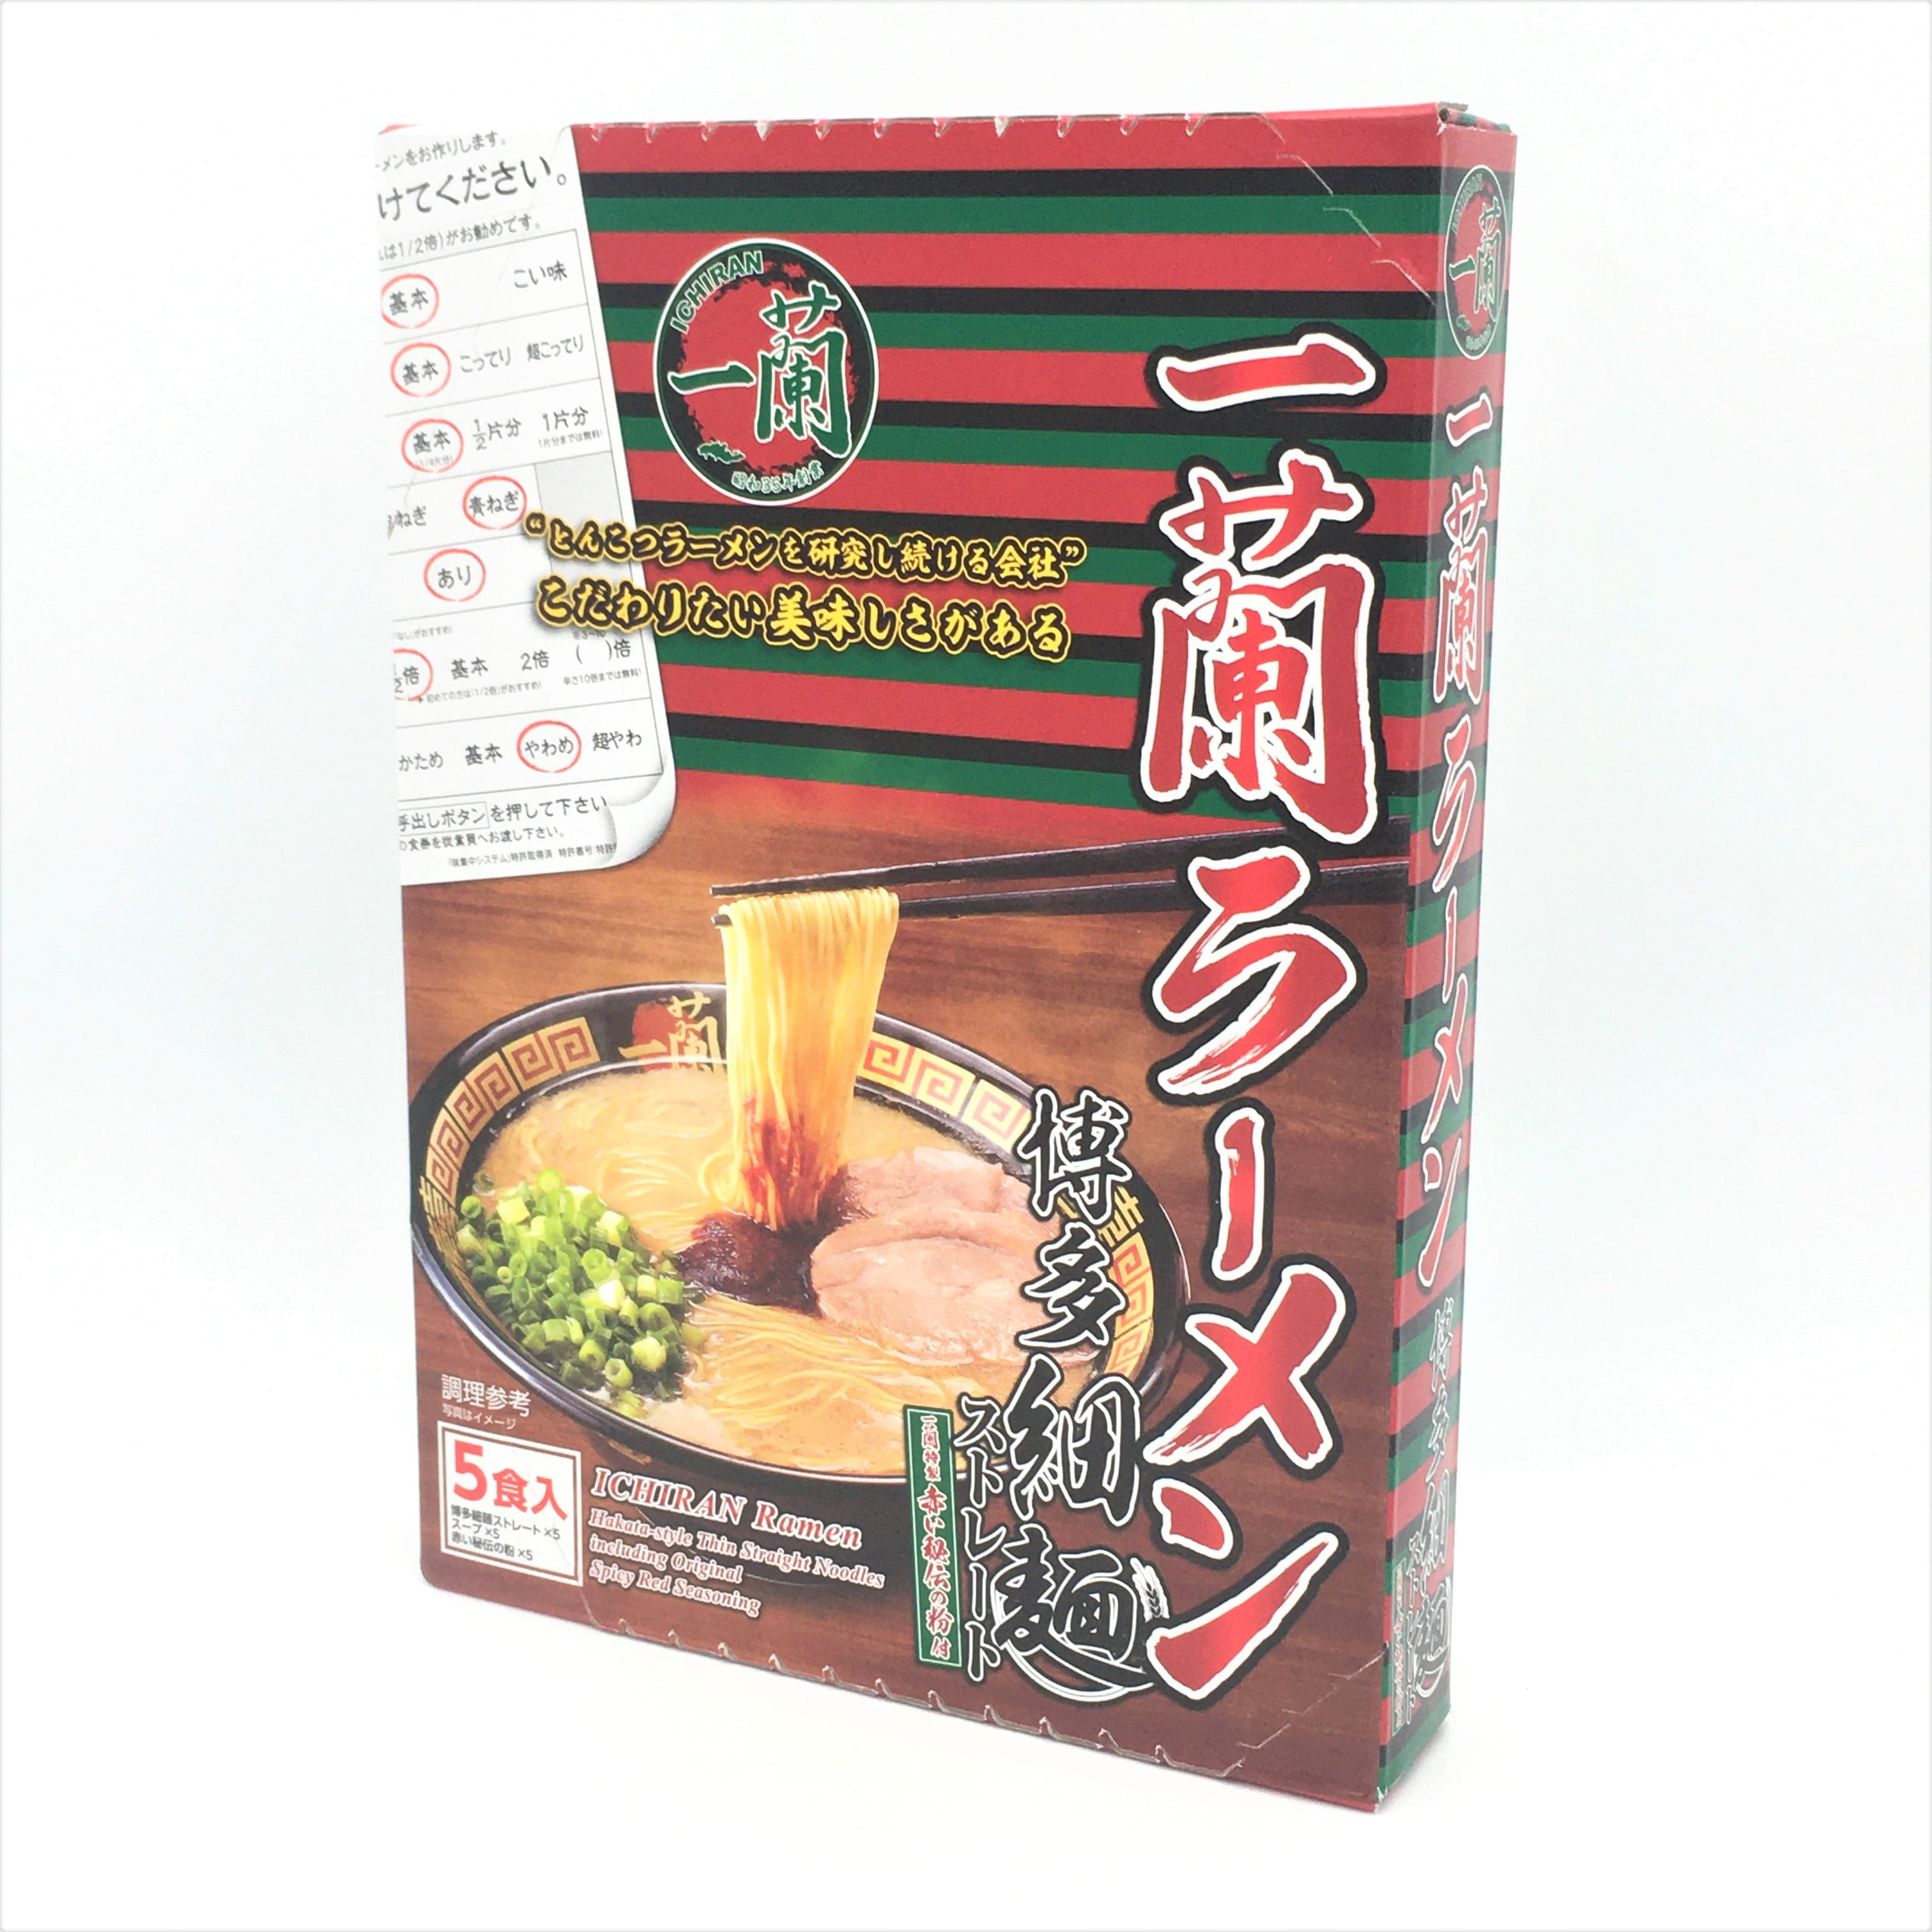 一蘭博多細麺 Ichiran Ramen (Hakata-Style Thin Noodles)645g/(129gx5pcs) - Walmart.com